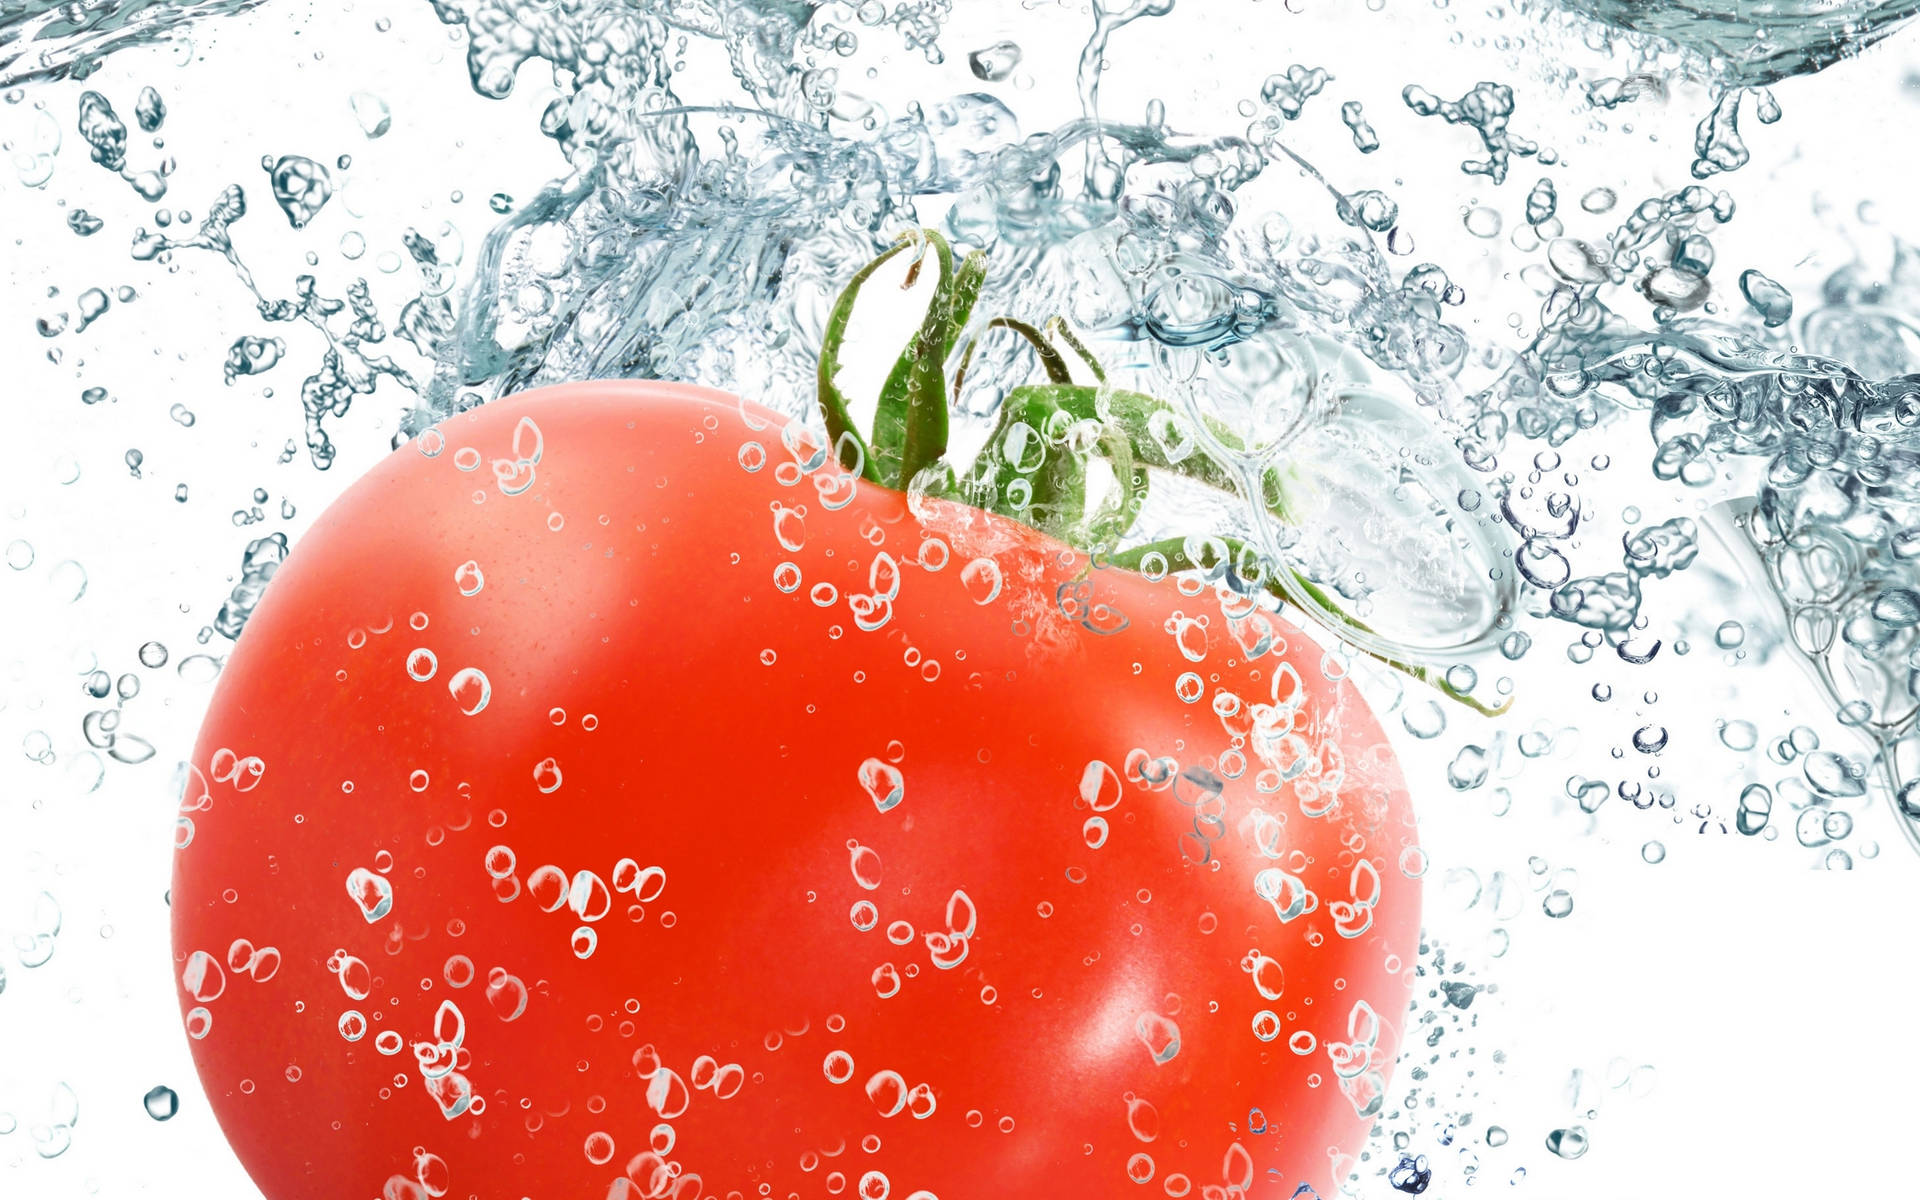 Red Tomato Fruit In A Splashing Action Wallpaper